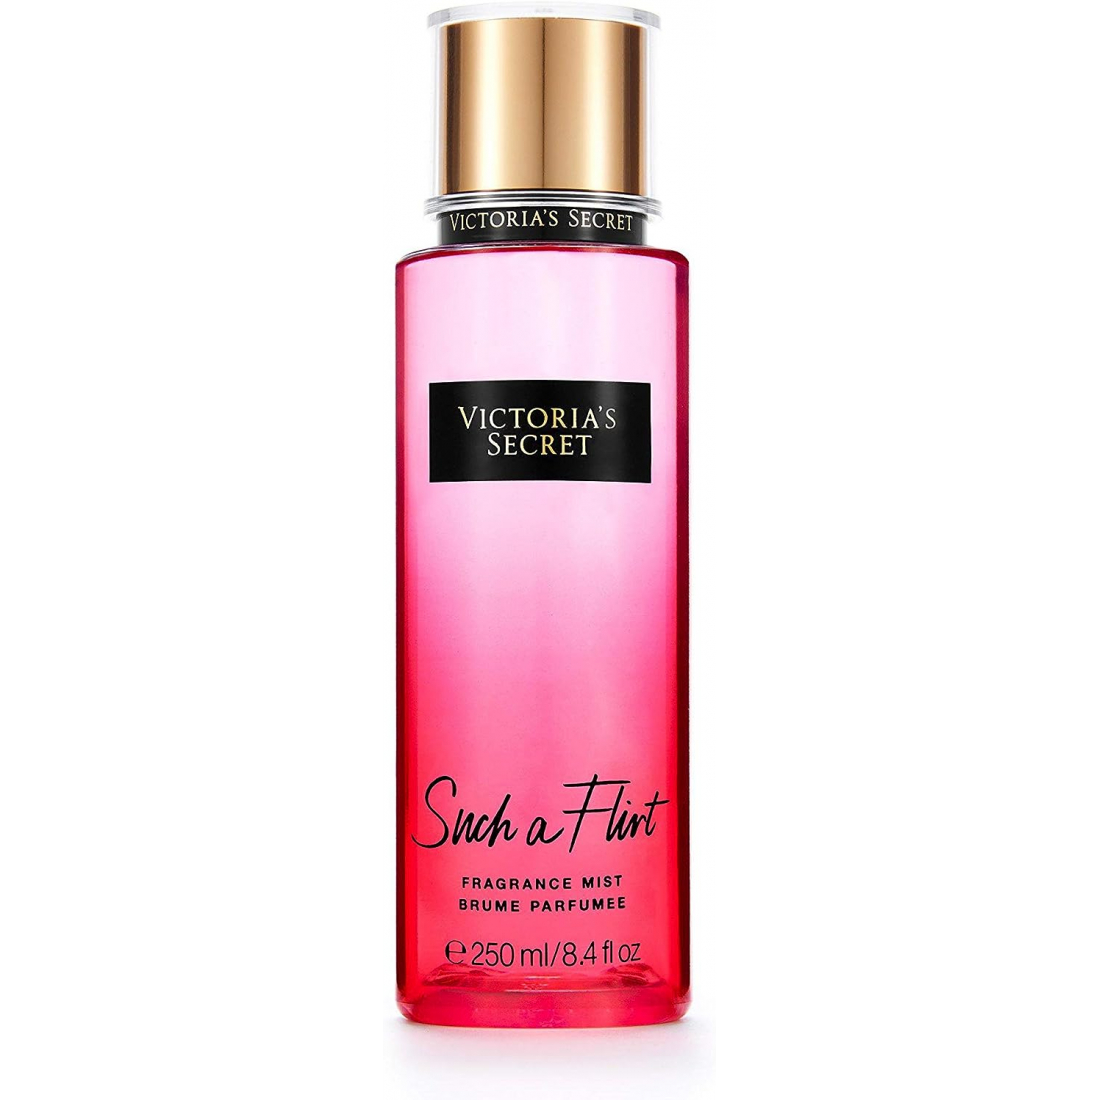 'Such A Flirt' Fragrance Mist - 250 ml